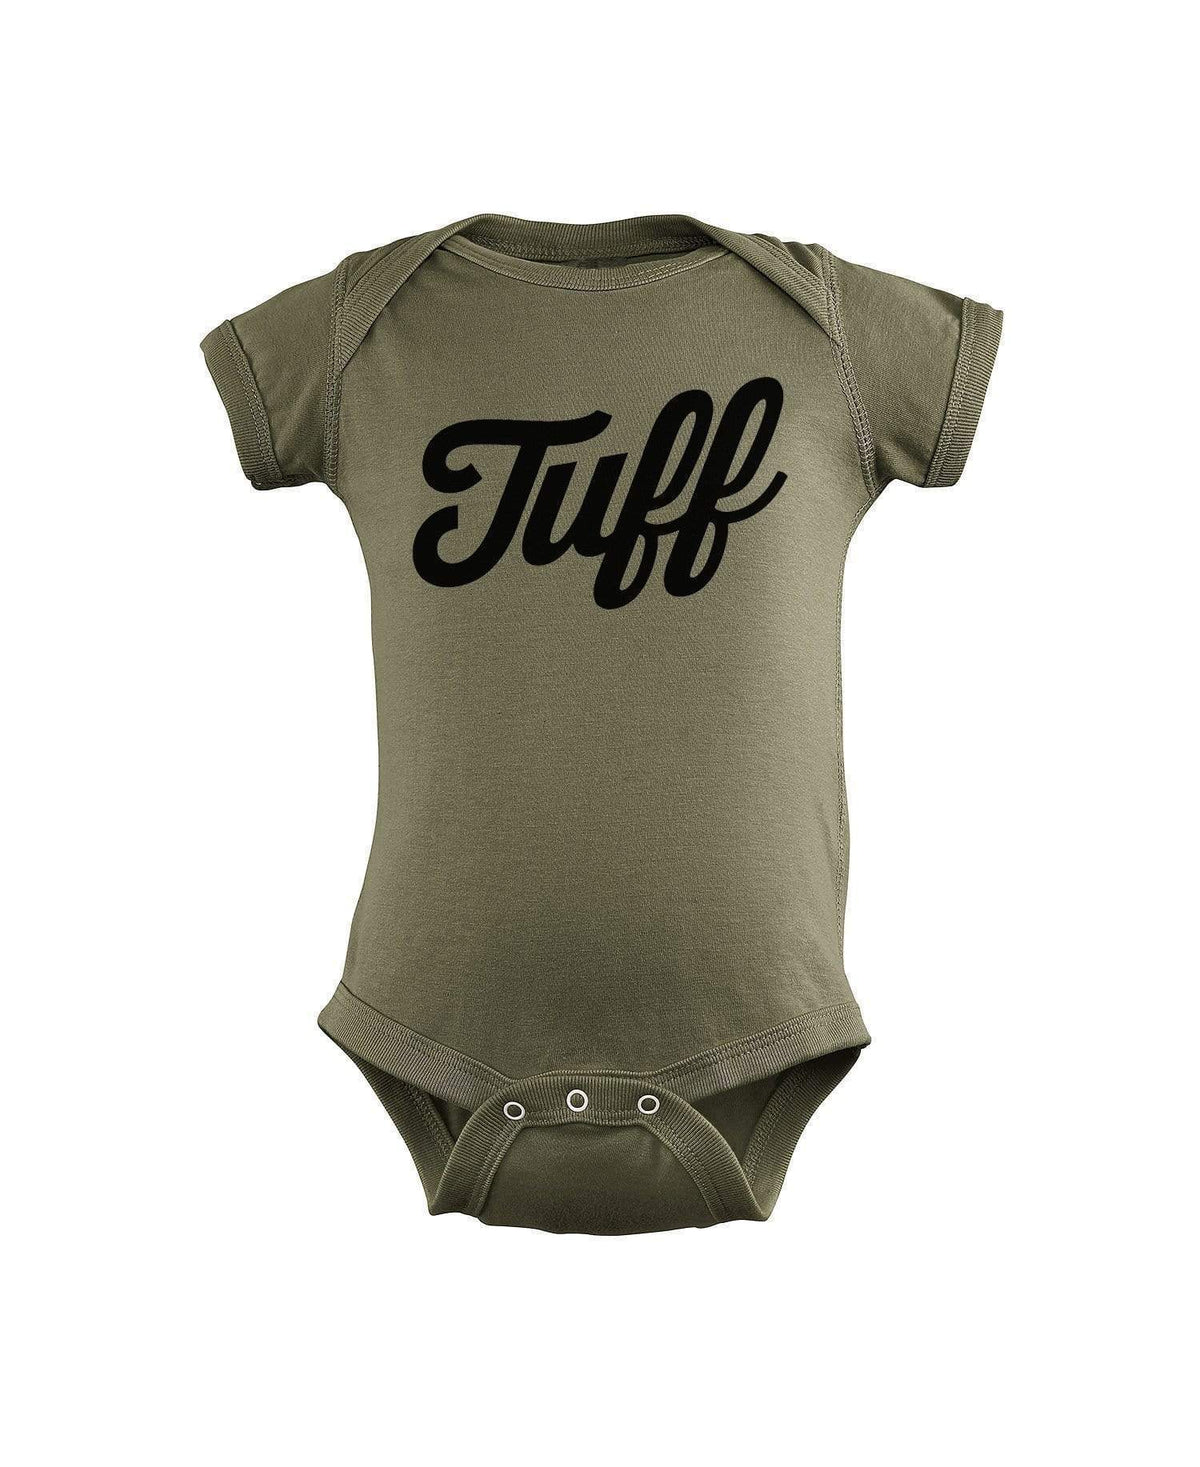 TUFF Script Infant Onesie NB / Military Green TuffWraps.com